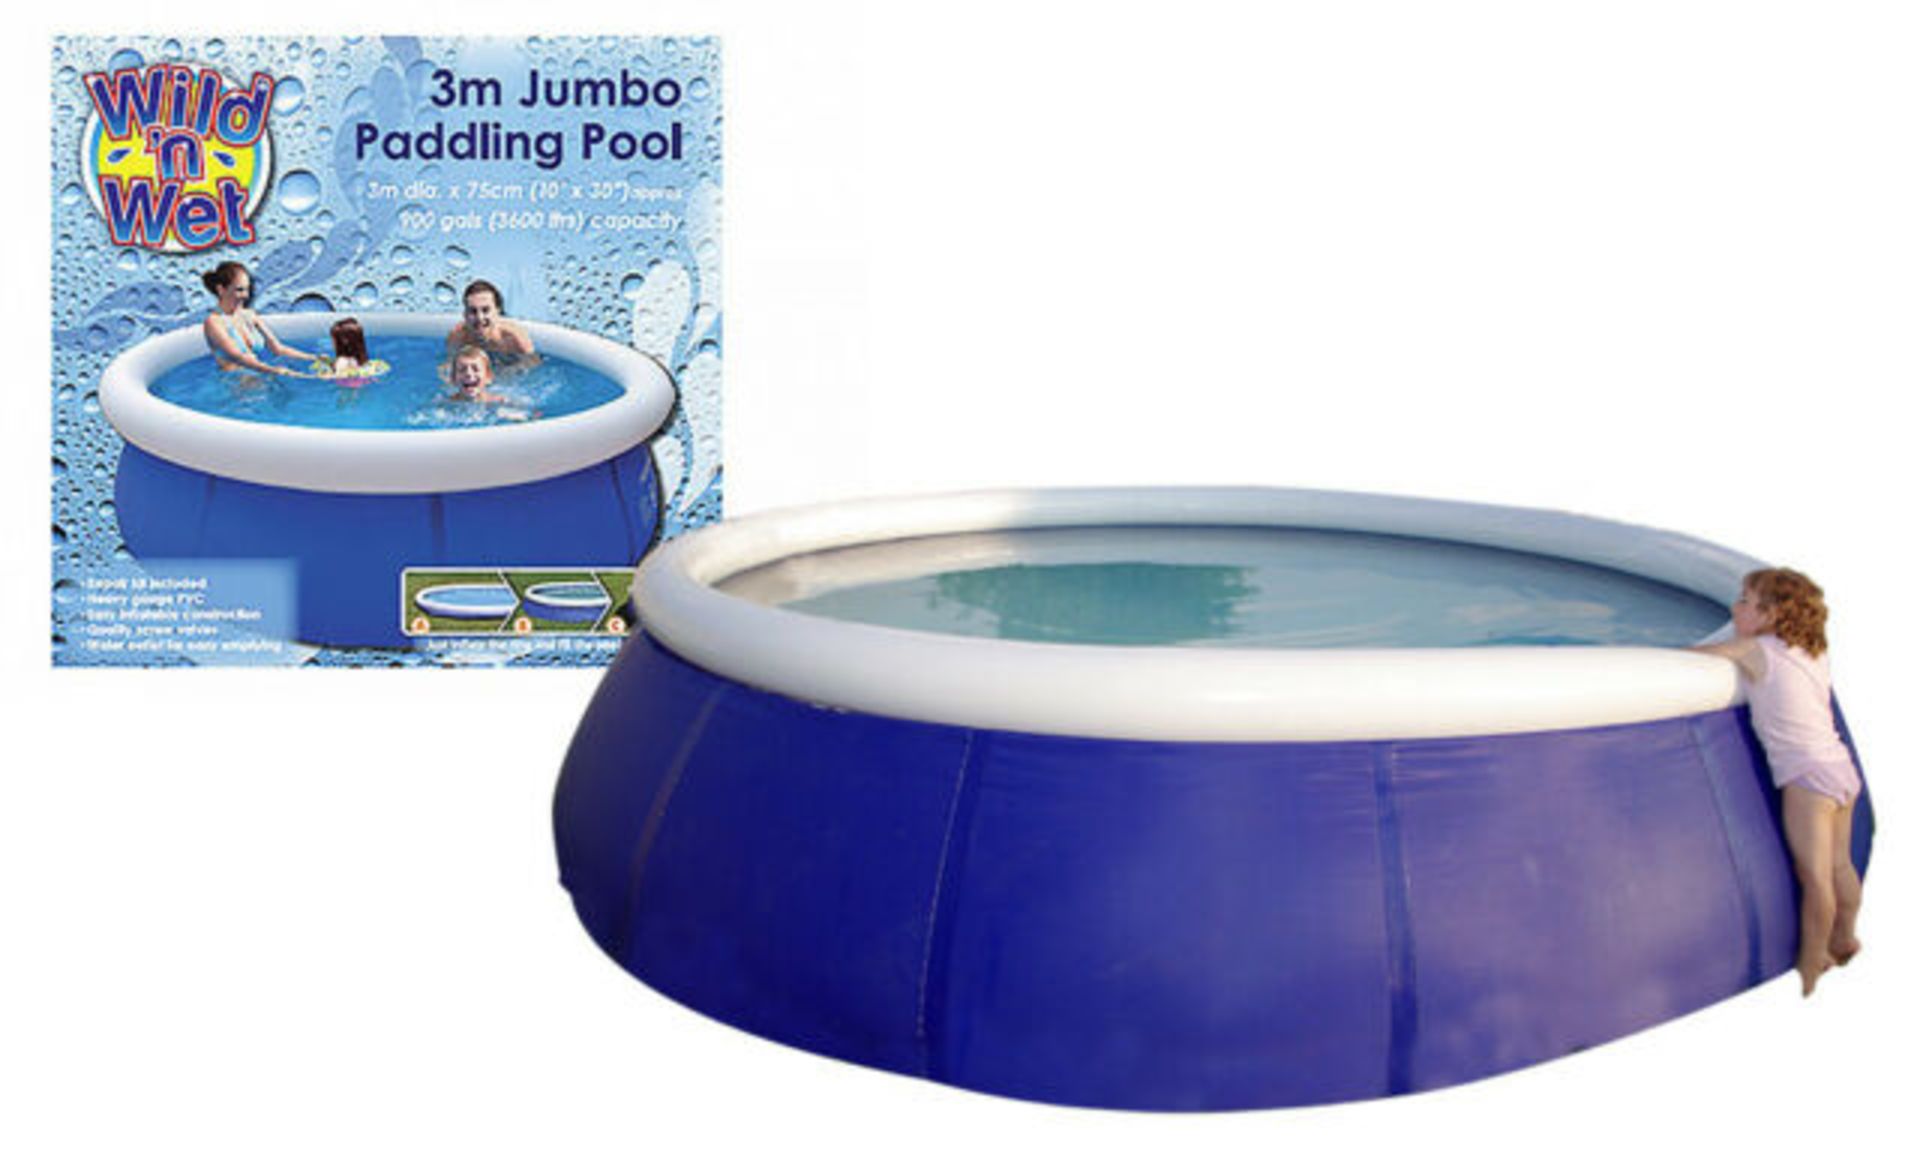 + VAT Brand New 3m Jumbo Paddling Pool - Includes Repair Kit - Easy Inflatable Construction -